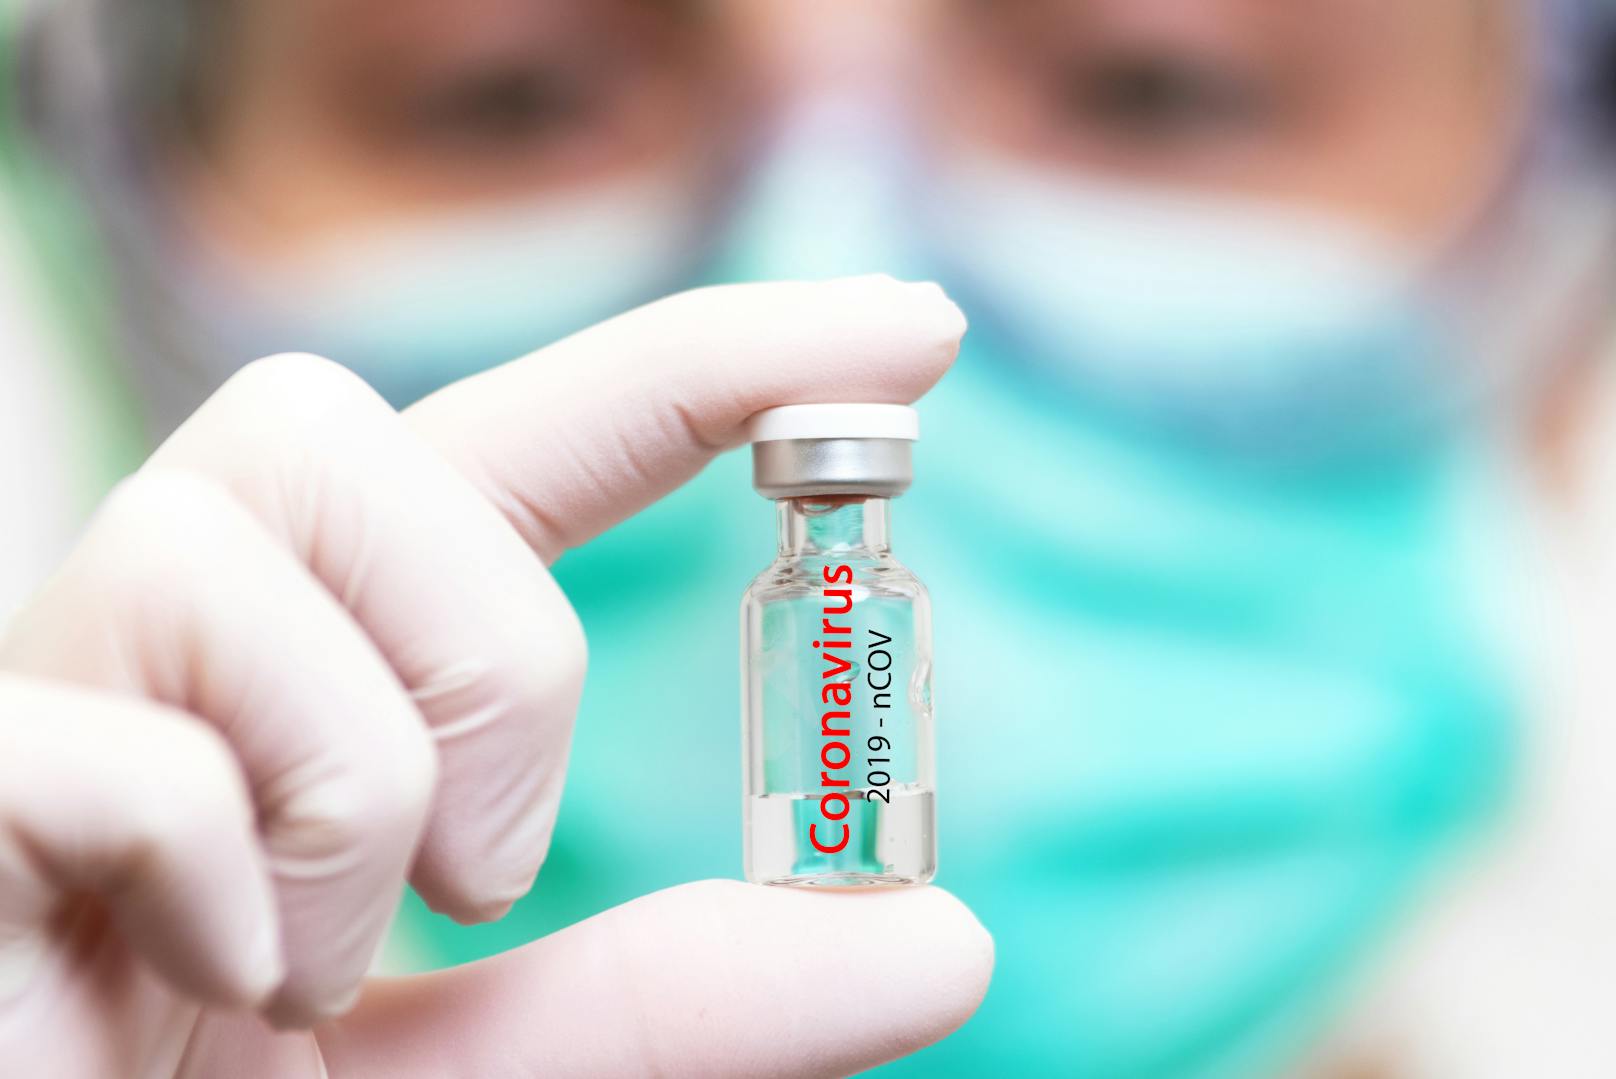 Corona-Impfstoff kommt in Russland in zwei Wochen